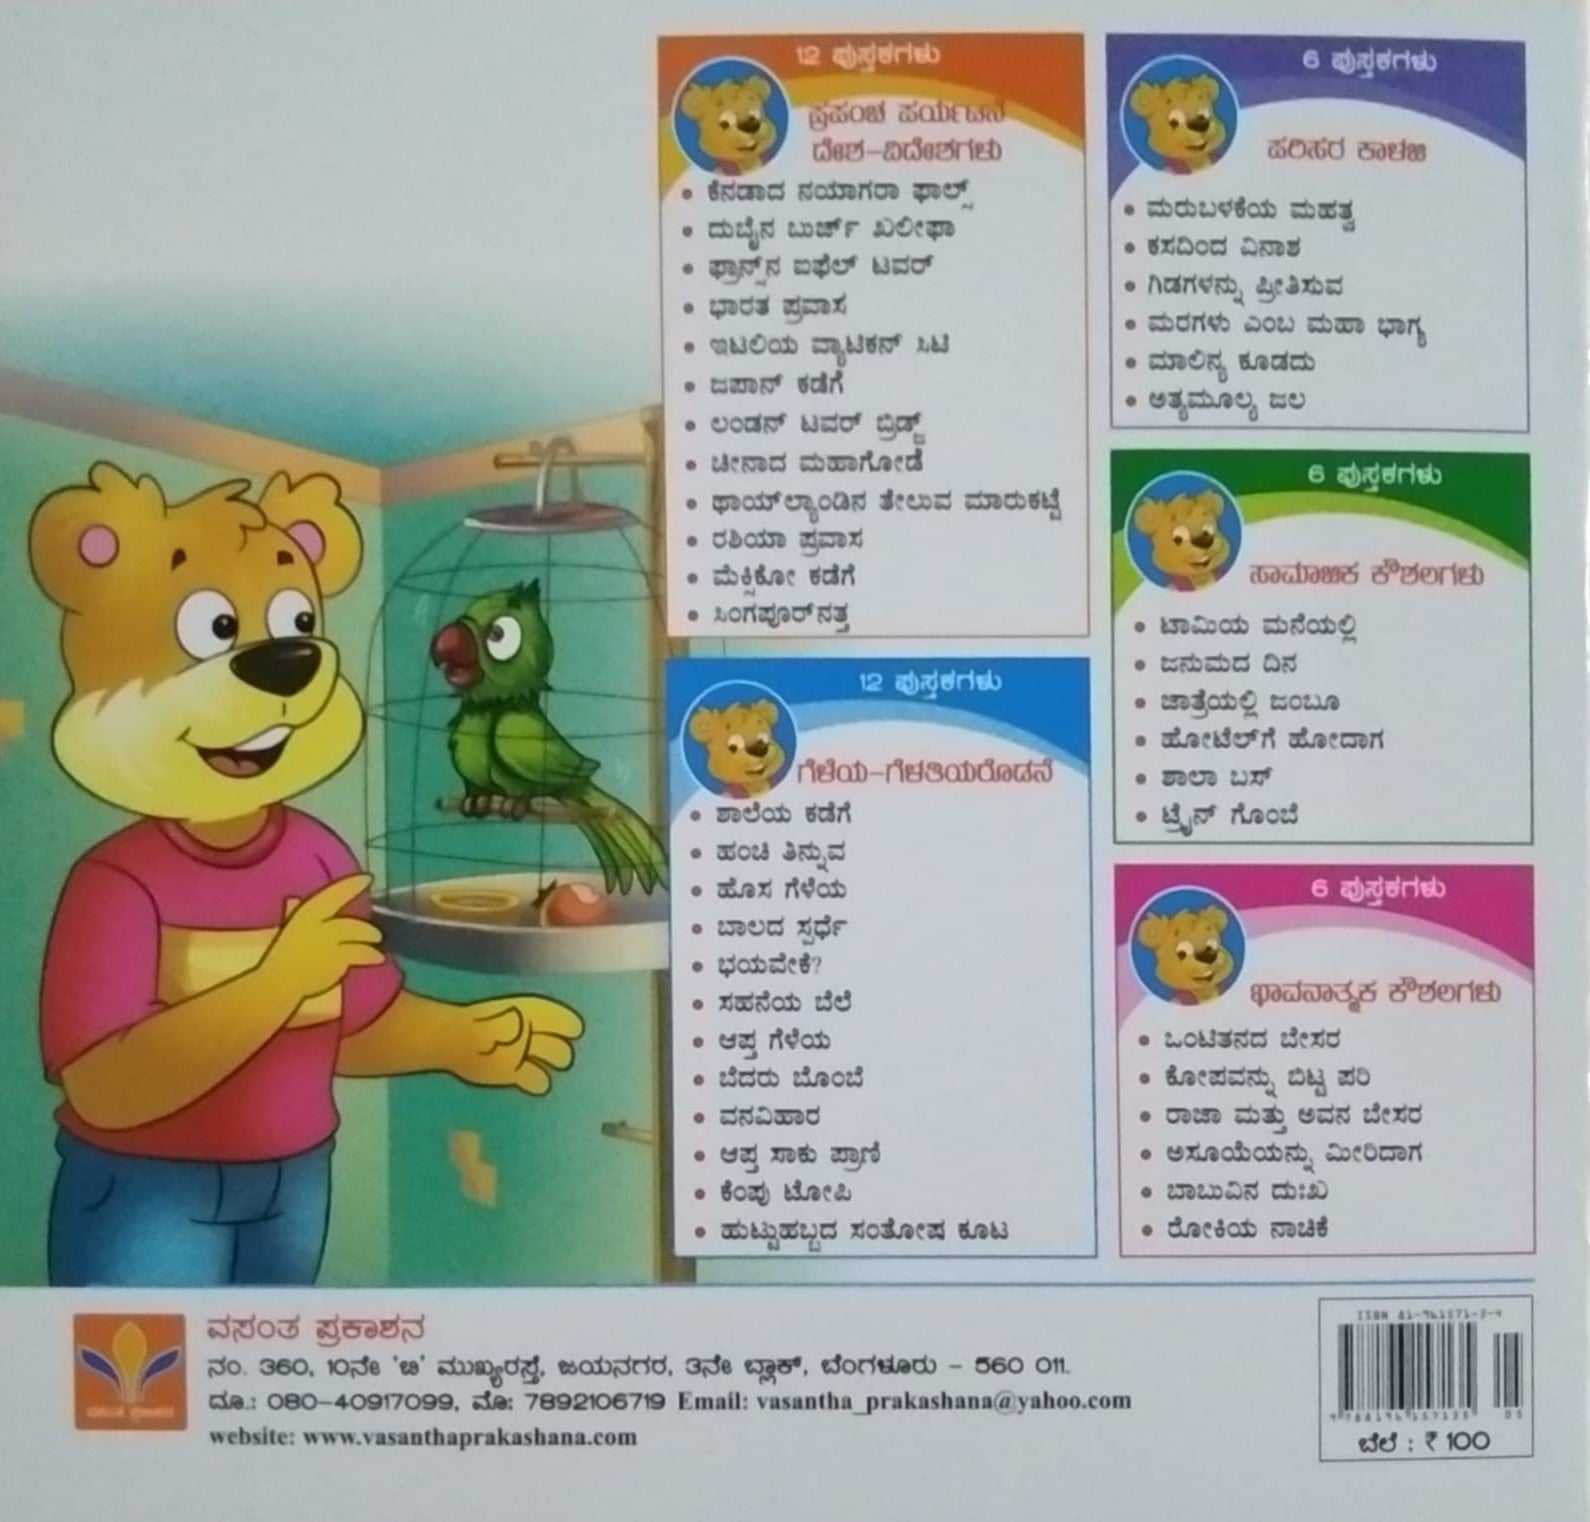 Aapta Saaku Prani is Children's Stories Book which is Written by S. Prattabhirama and Published by Vasantha Prakashana